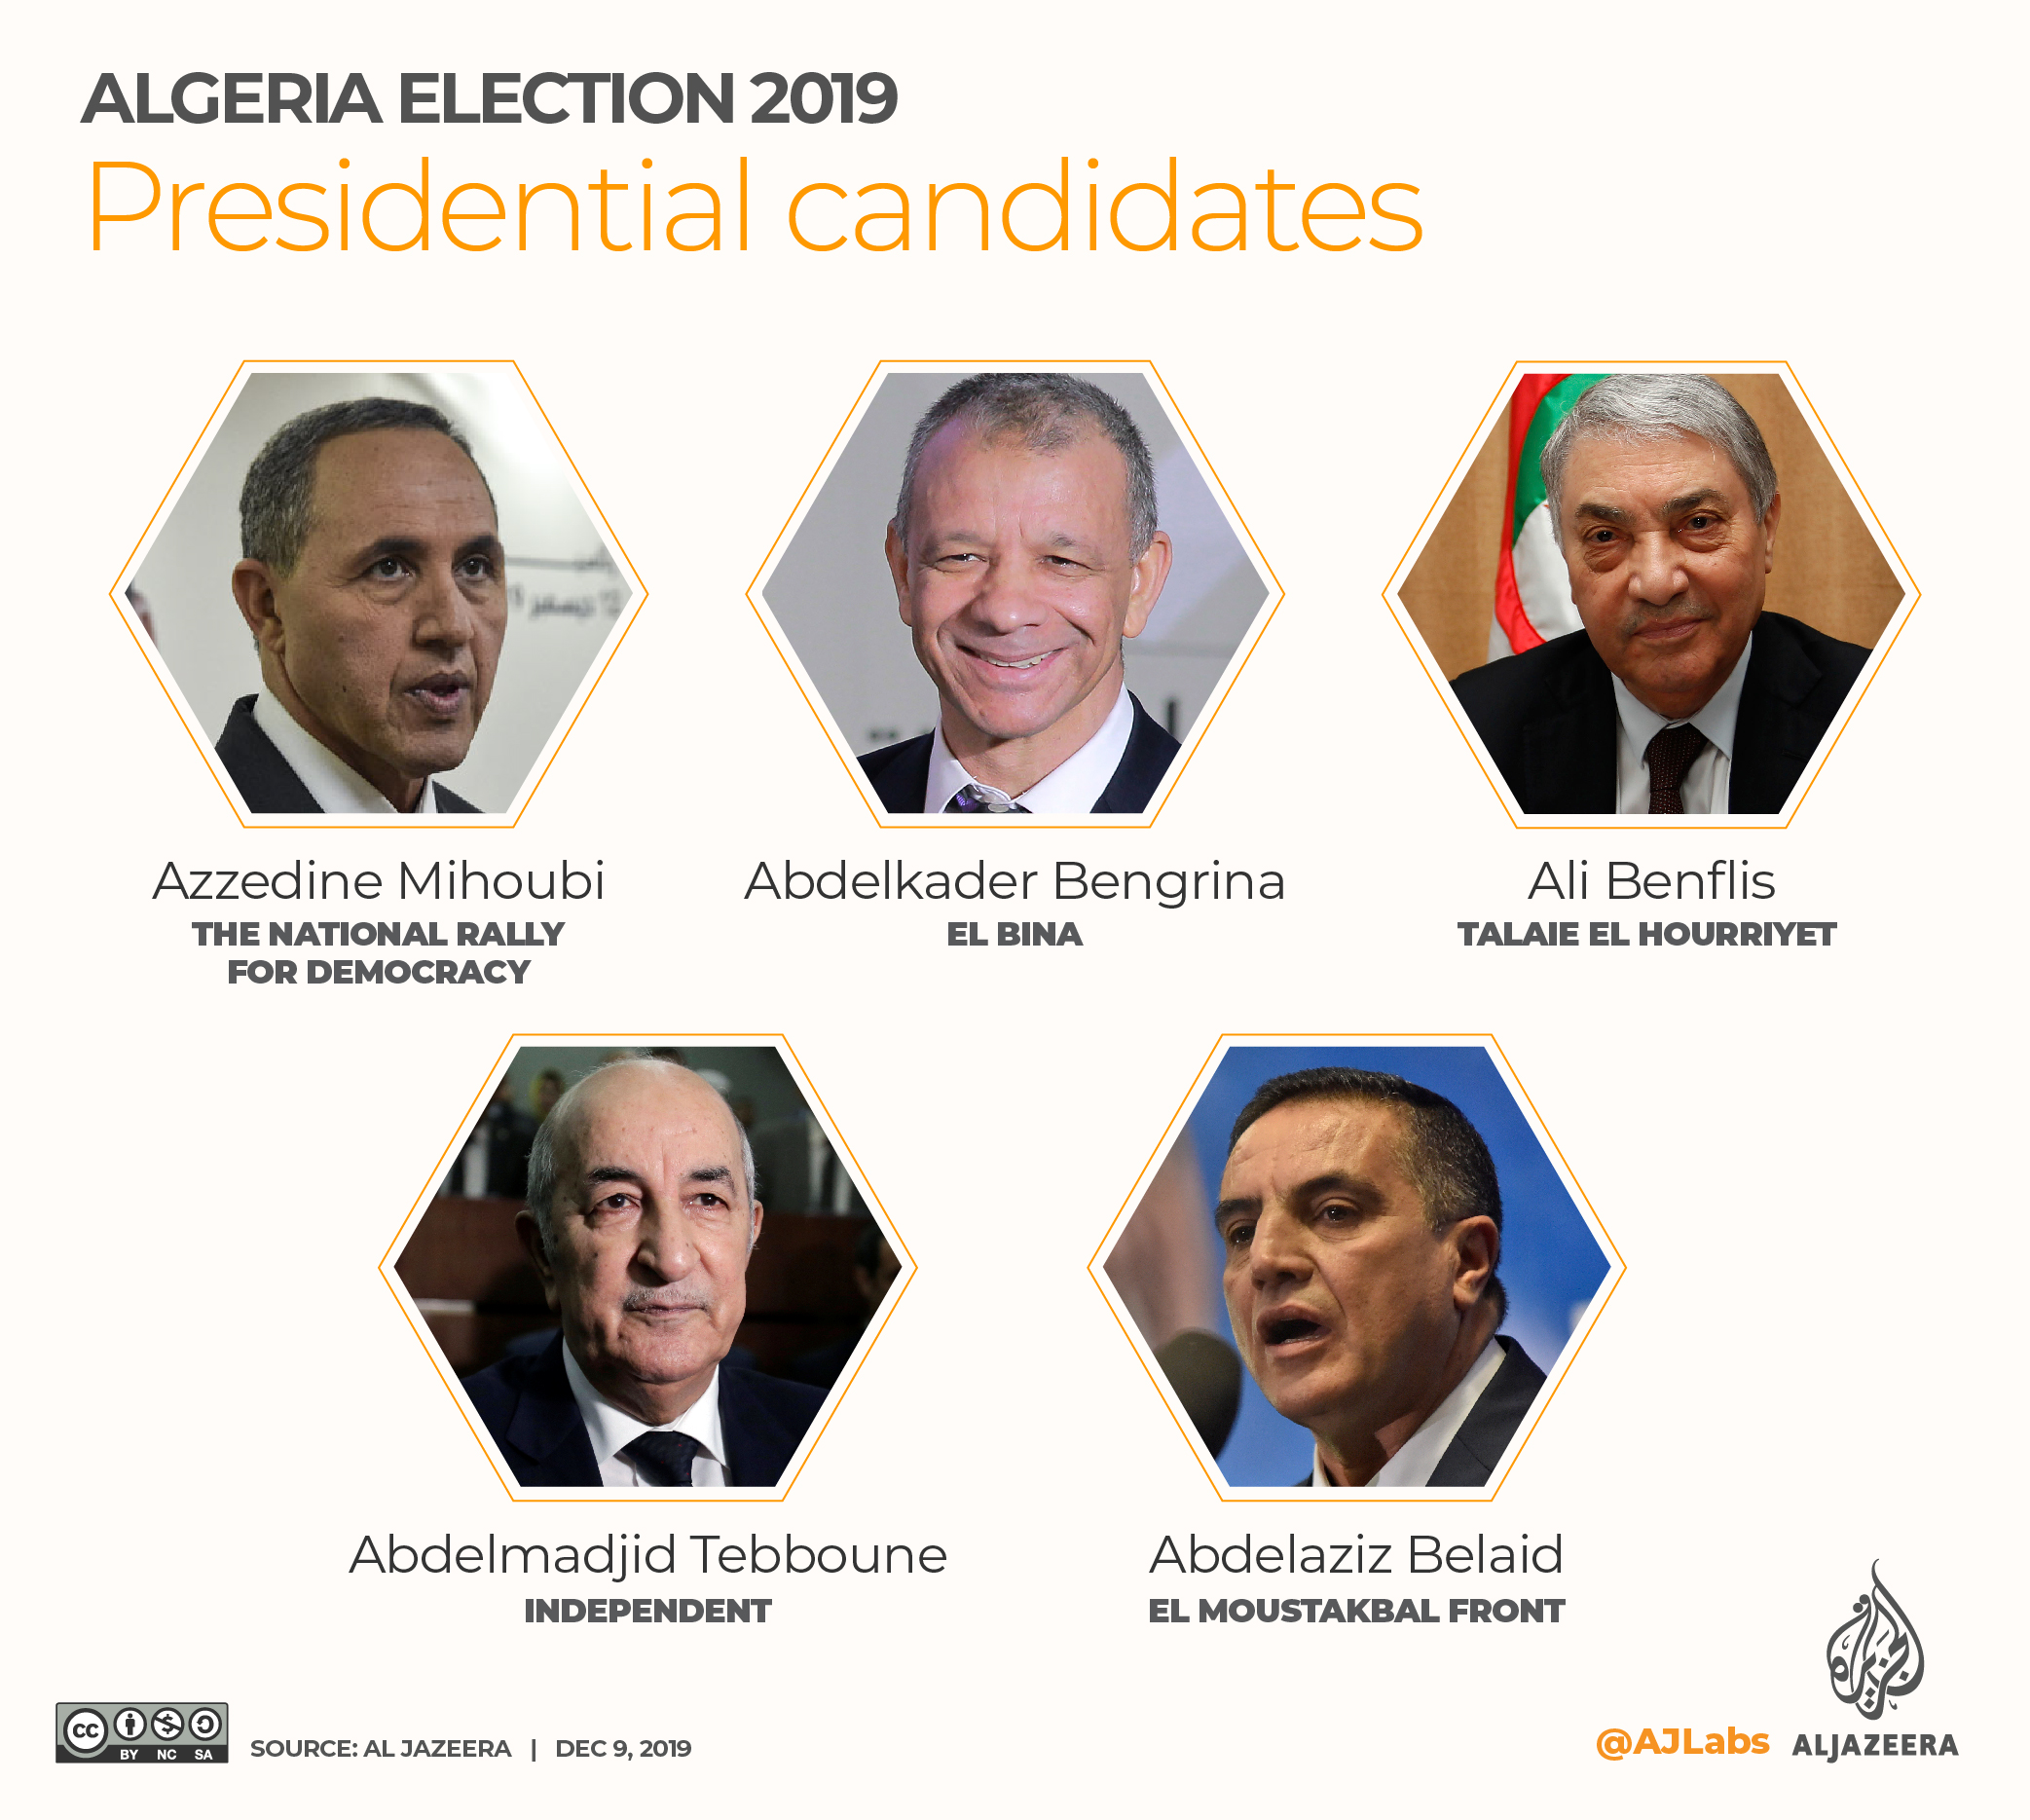 ALGERIA PRESIDENTIAL ELECTIONS SNAPSHOTS [Al Jazeera]